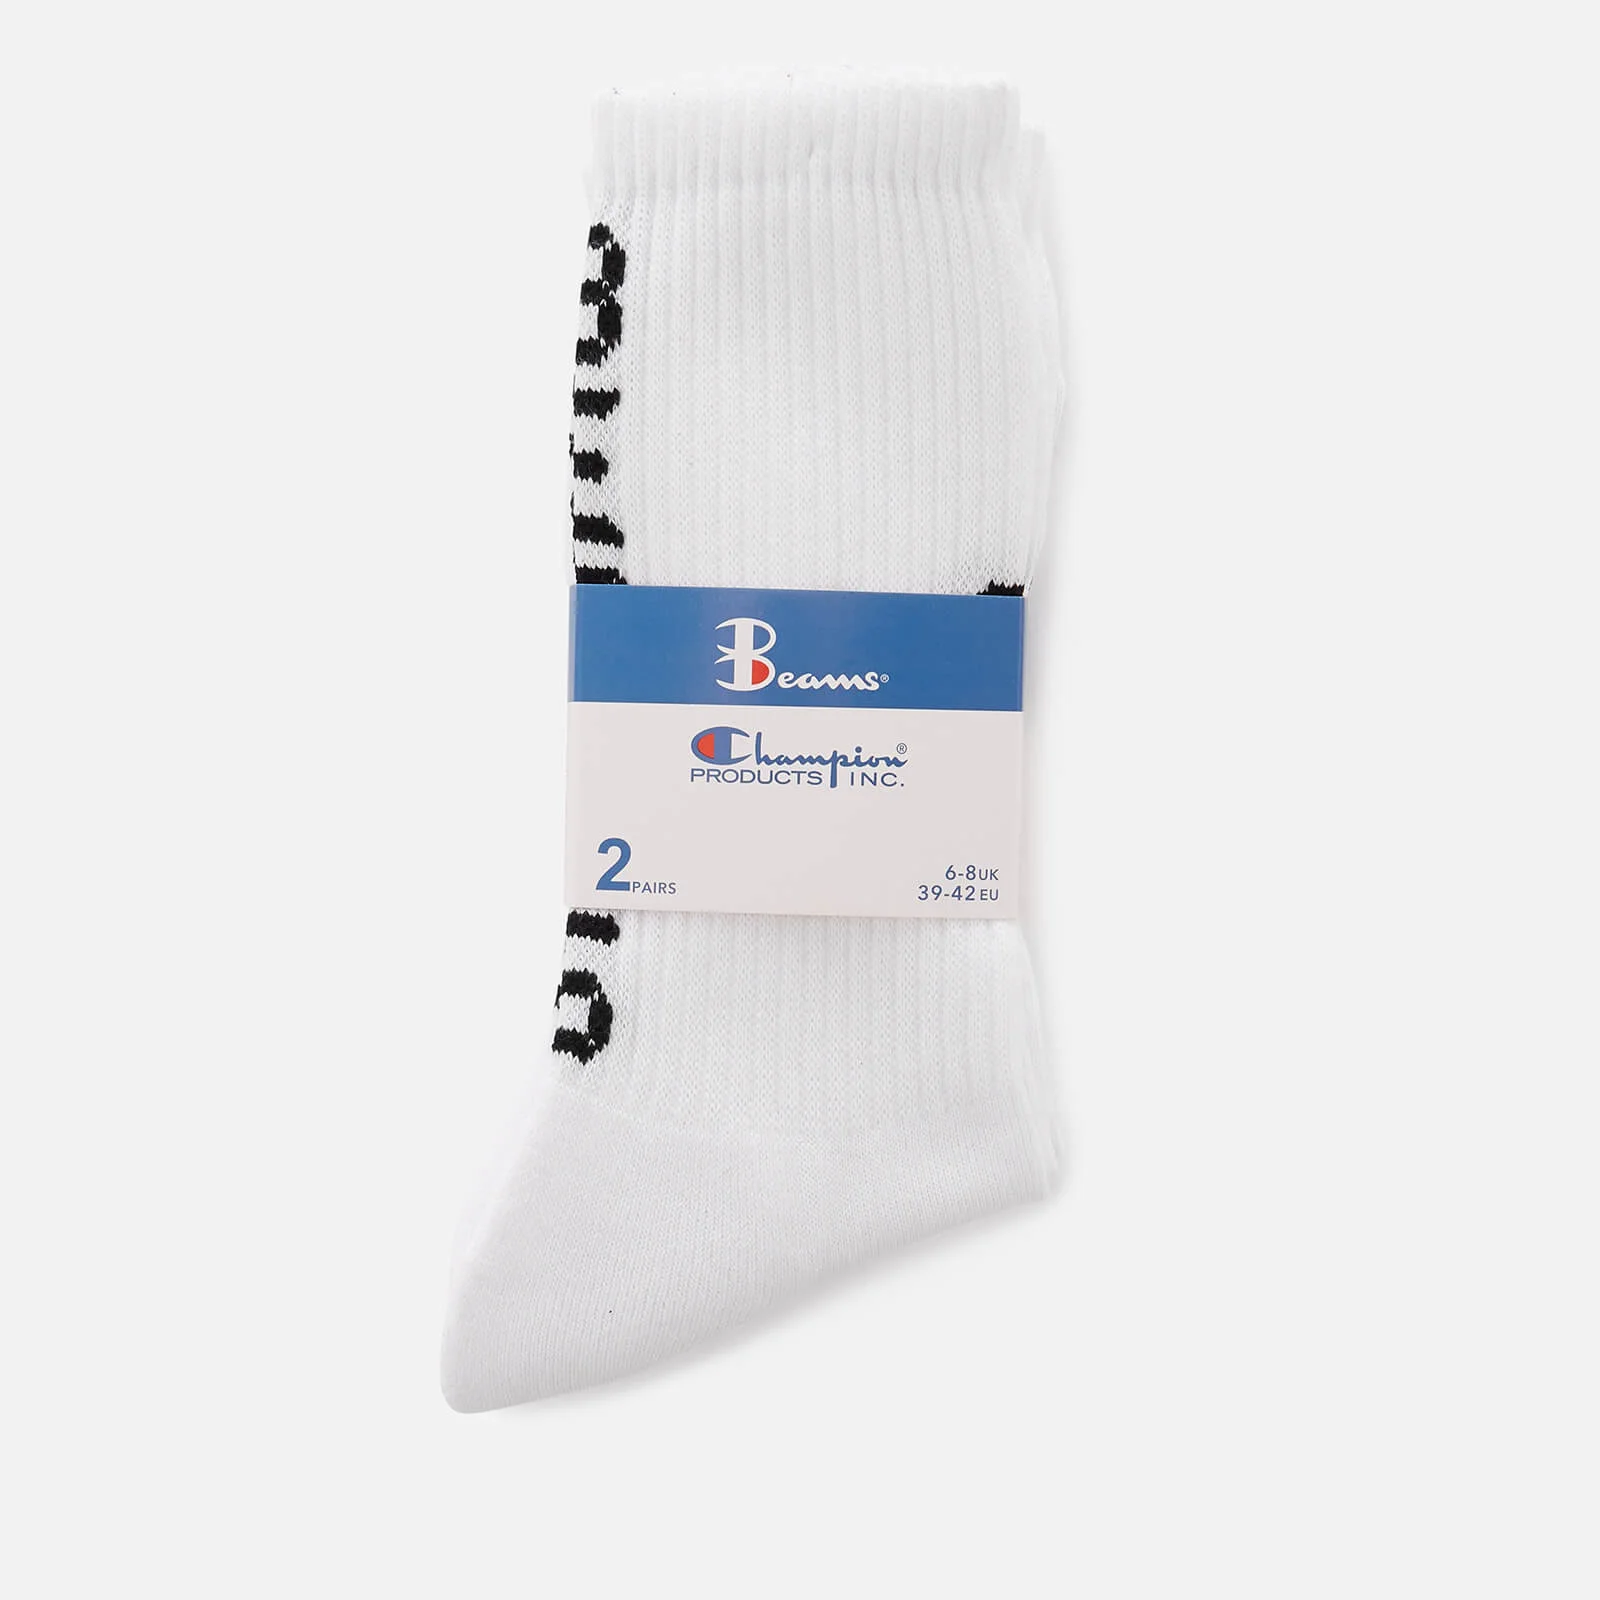 Champion X Beams Men's Socks - White Image 1